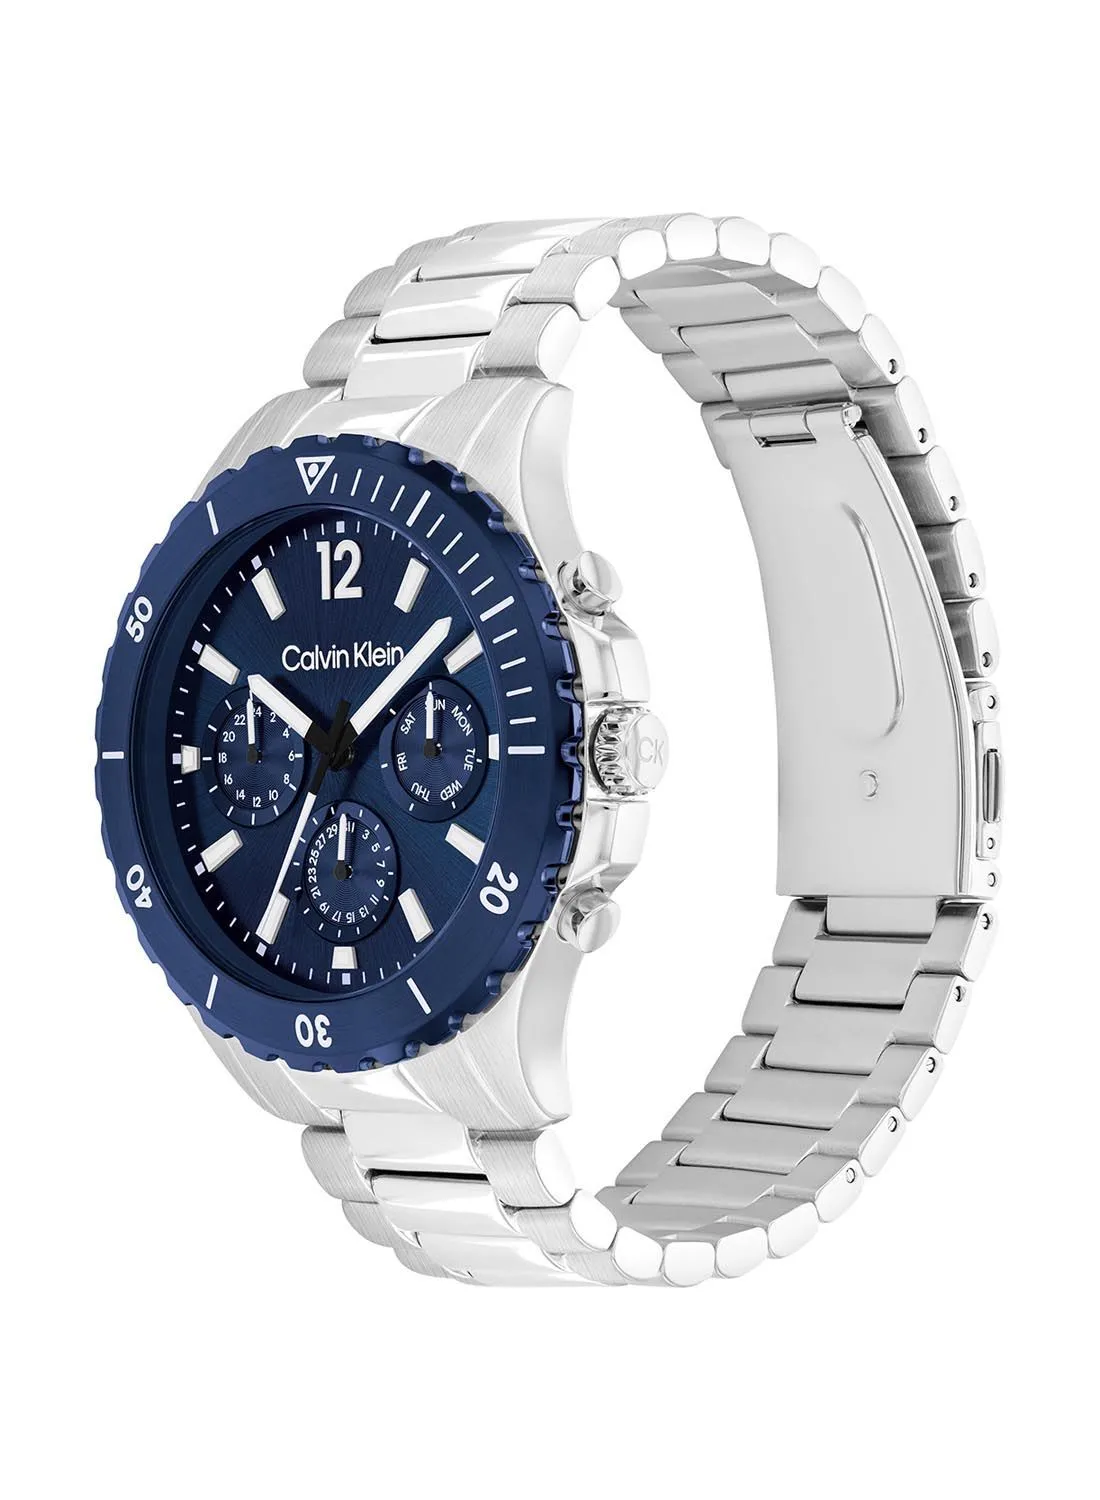 CALVIN KLEIN Analog Round Waterproof  Wrist Watch With Stainless Steel 25200115